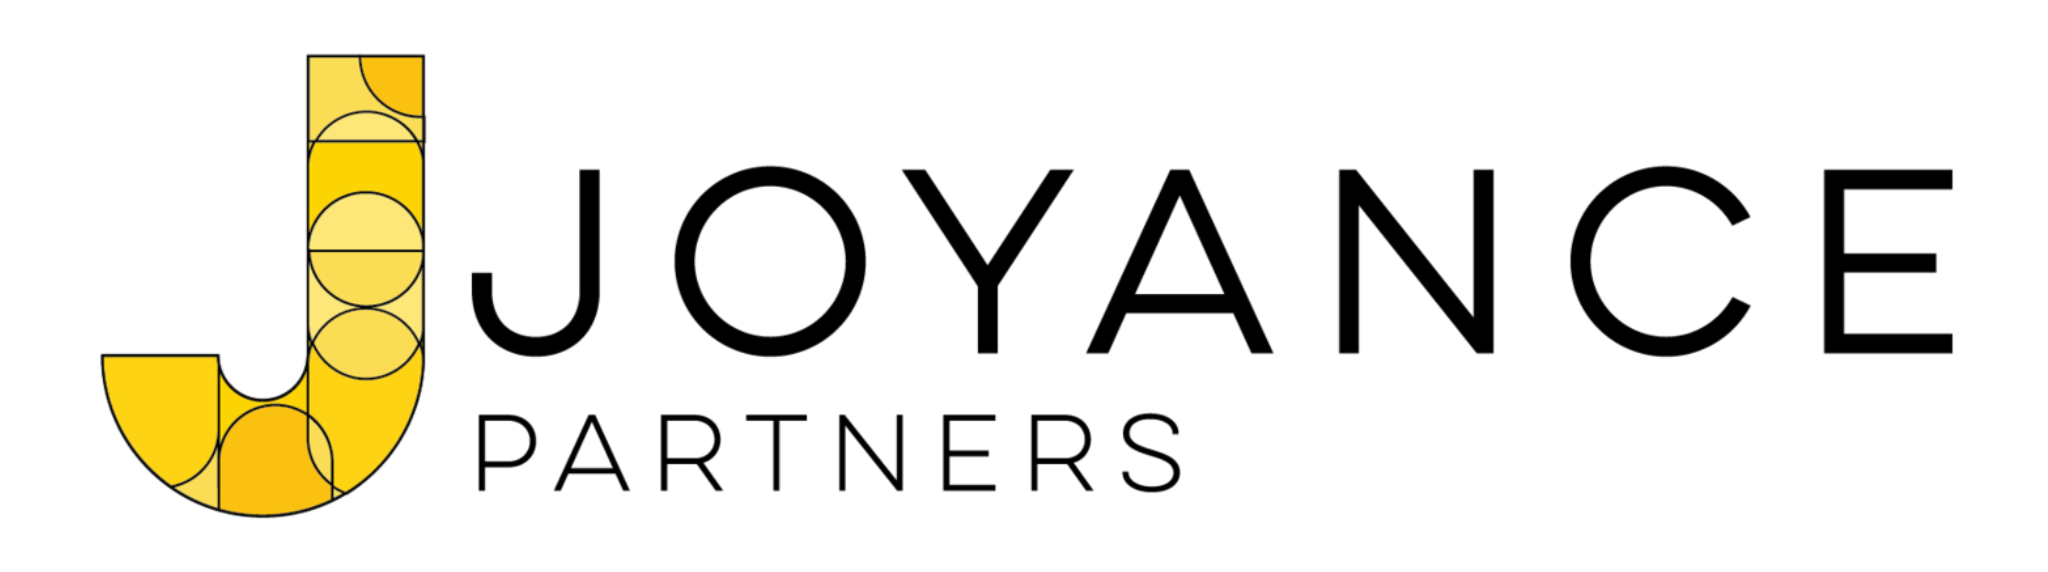 Joyance Partners